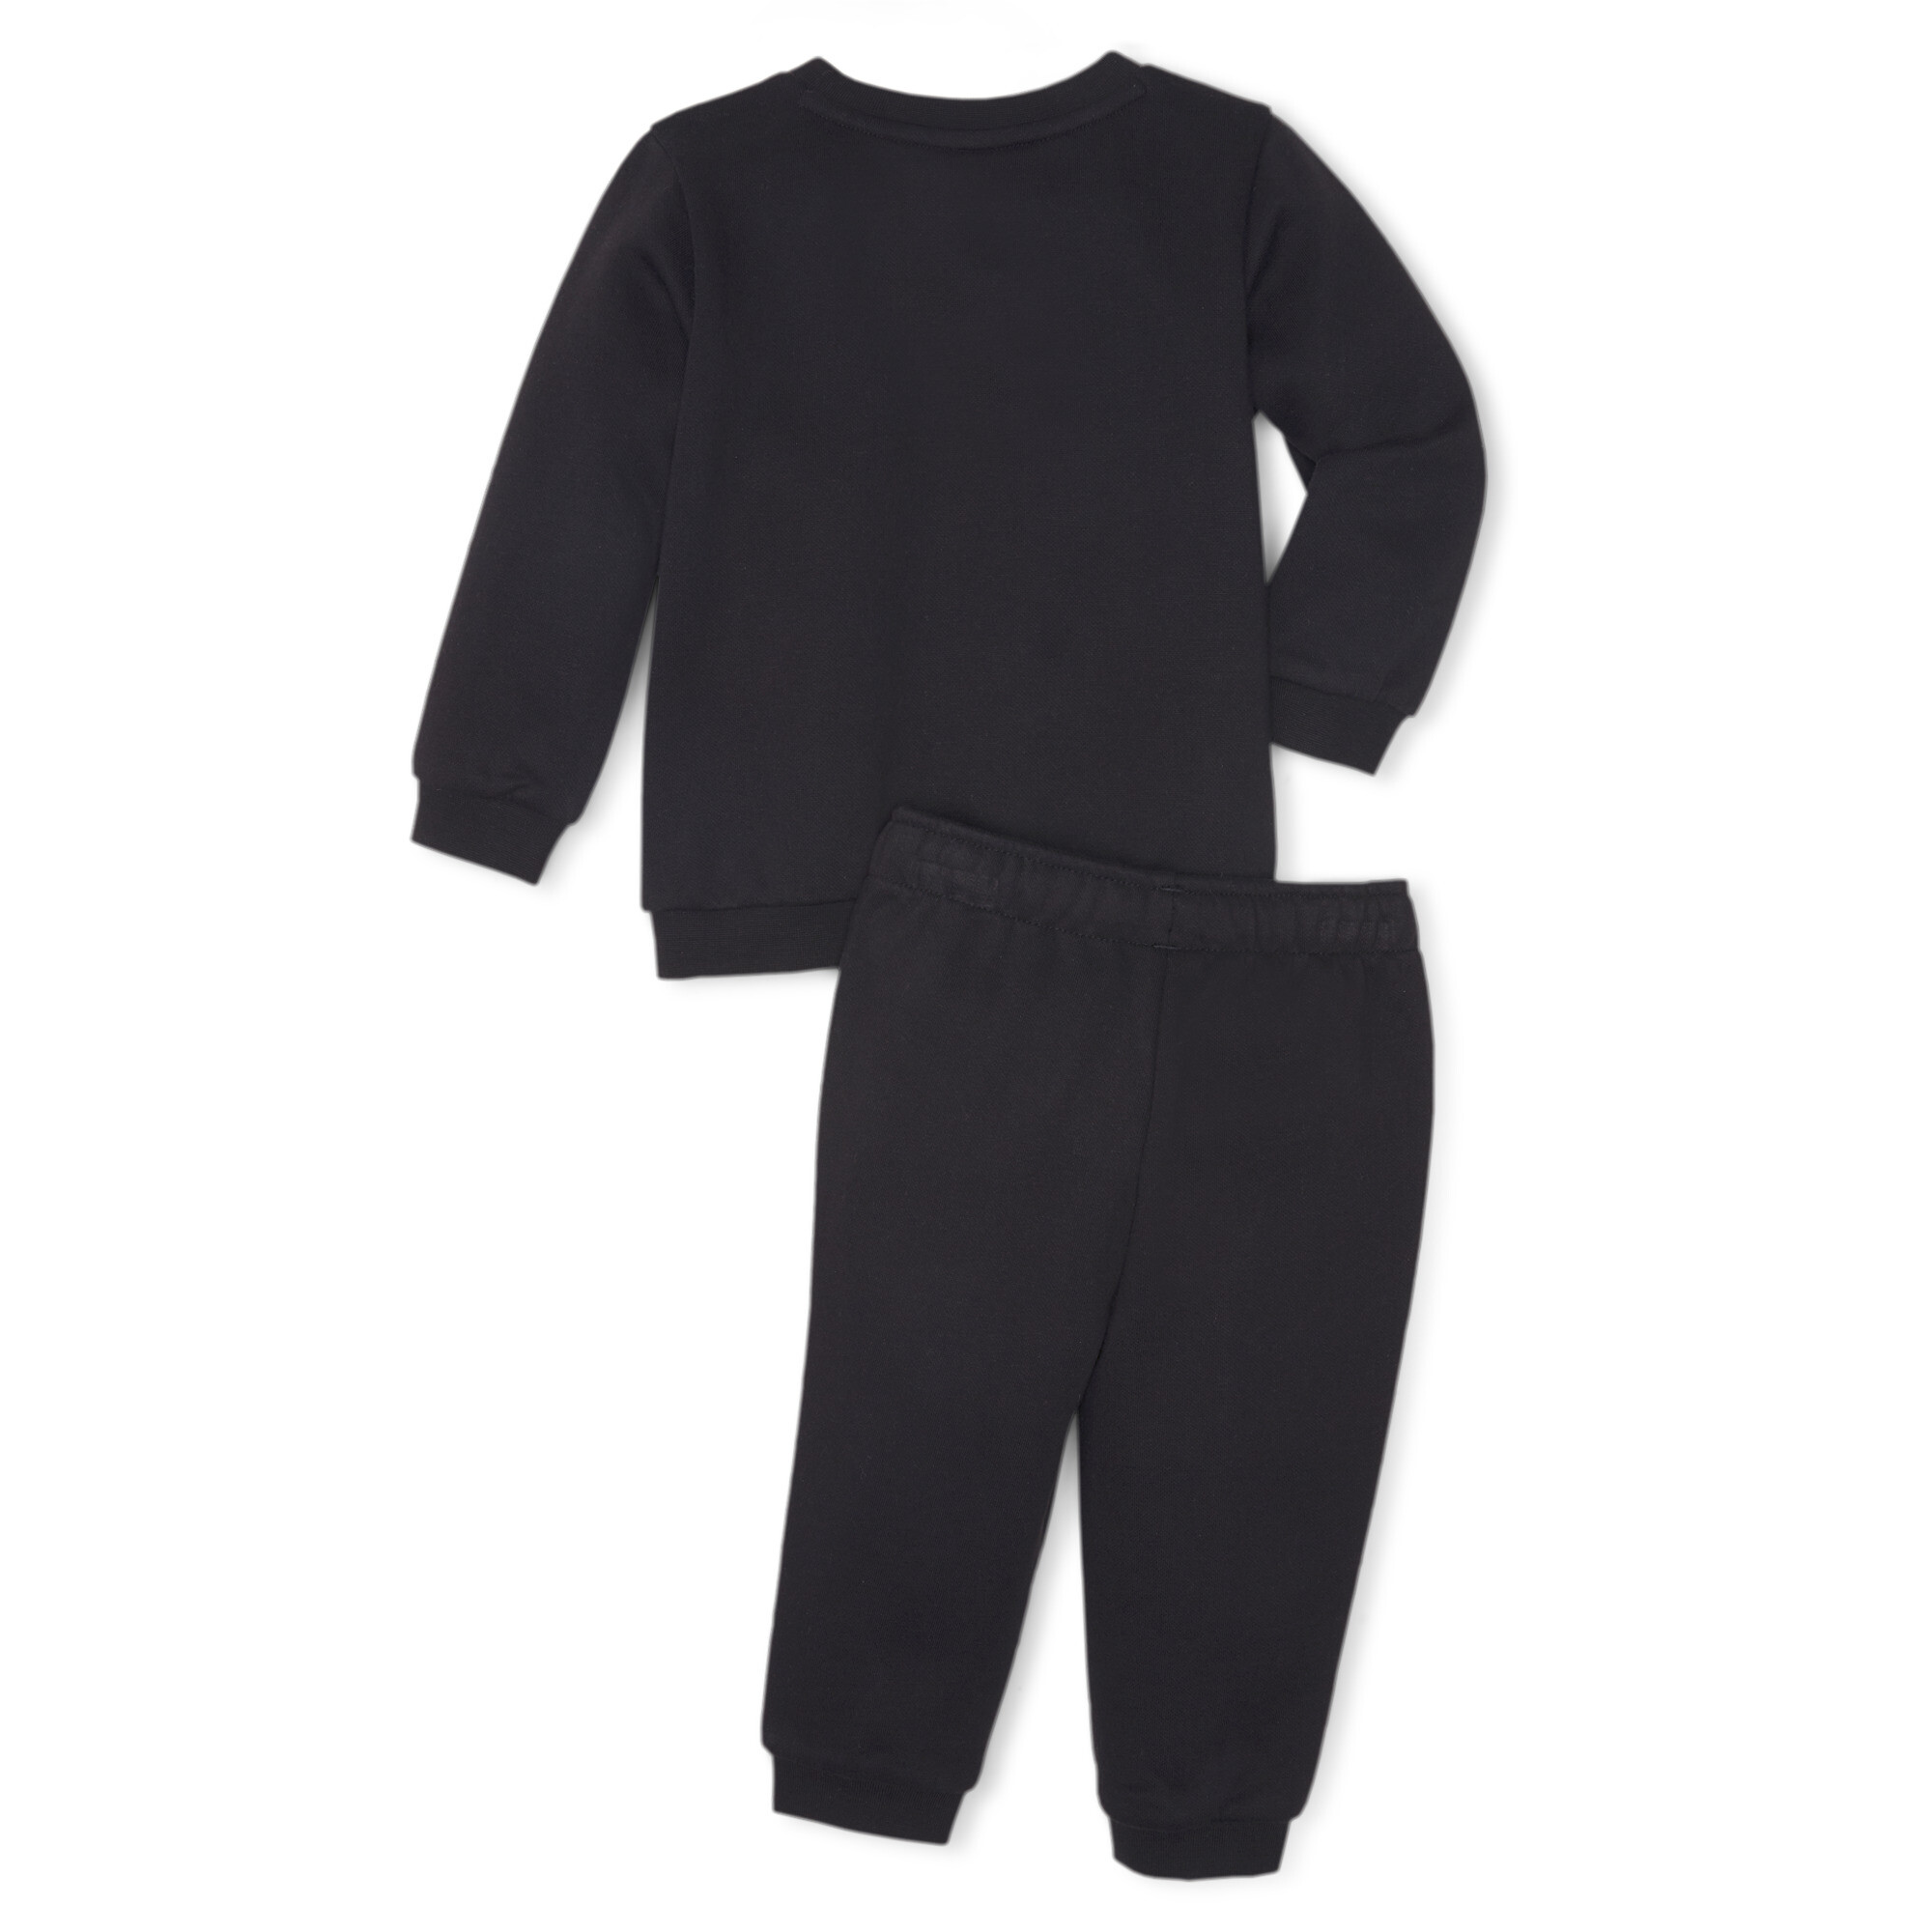 PUMA Essentials Minicats Crew Neck Babies' Jogger Suit In Black, Size 4-6 Months